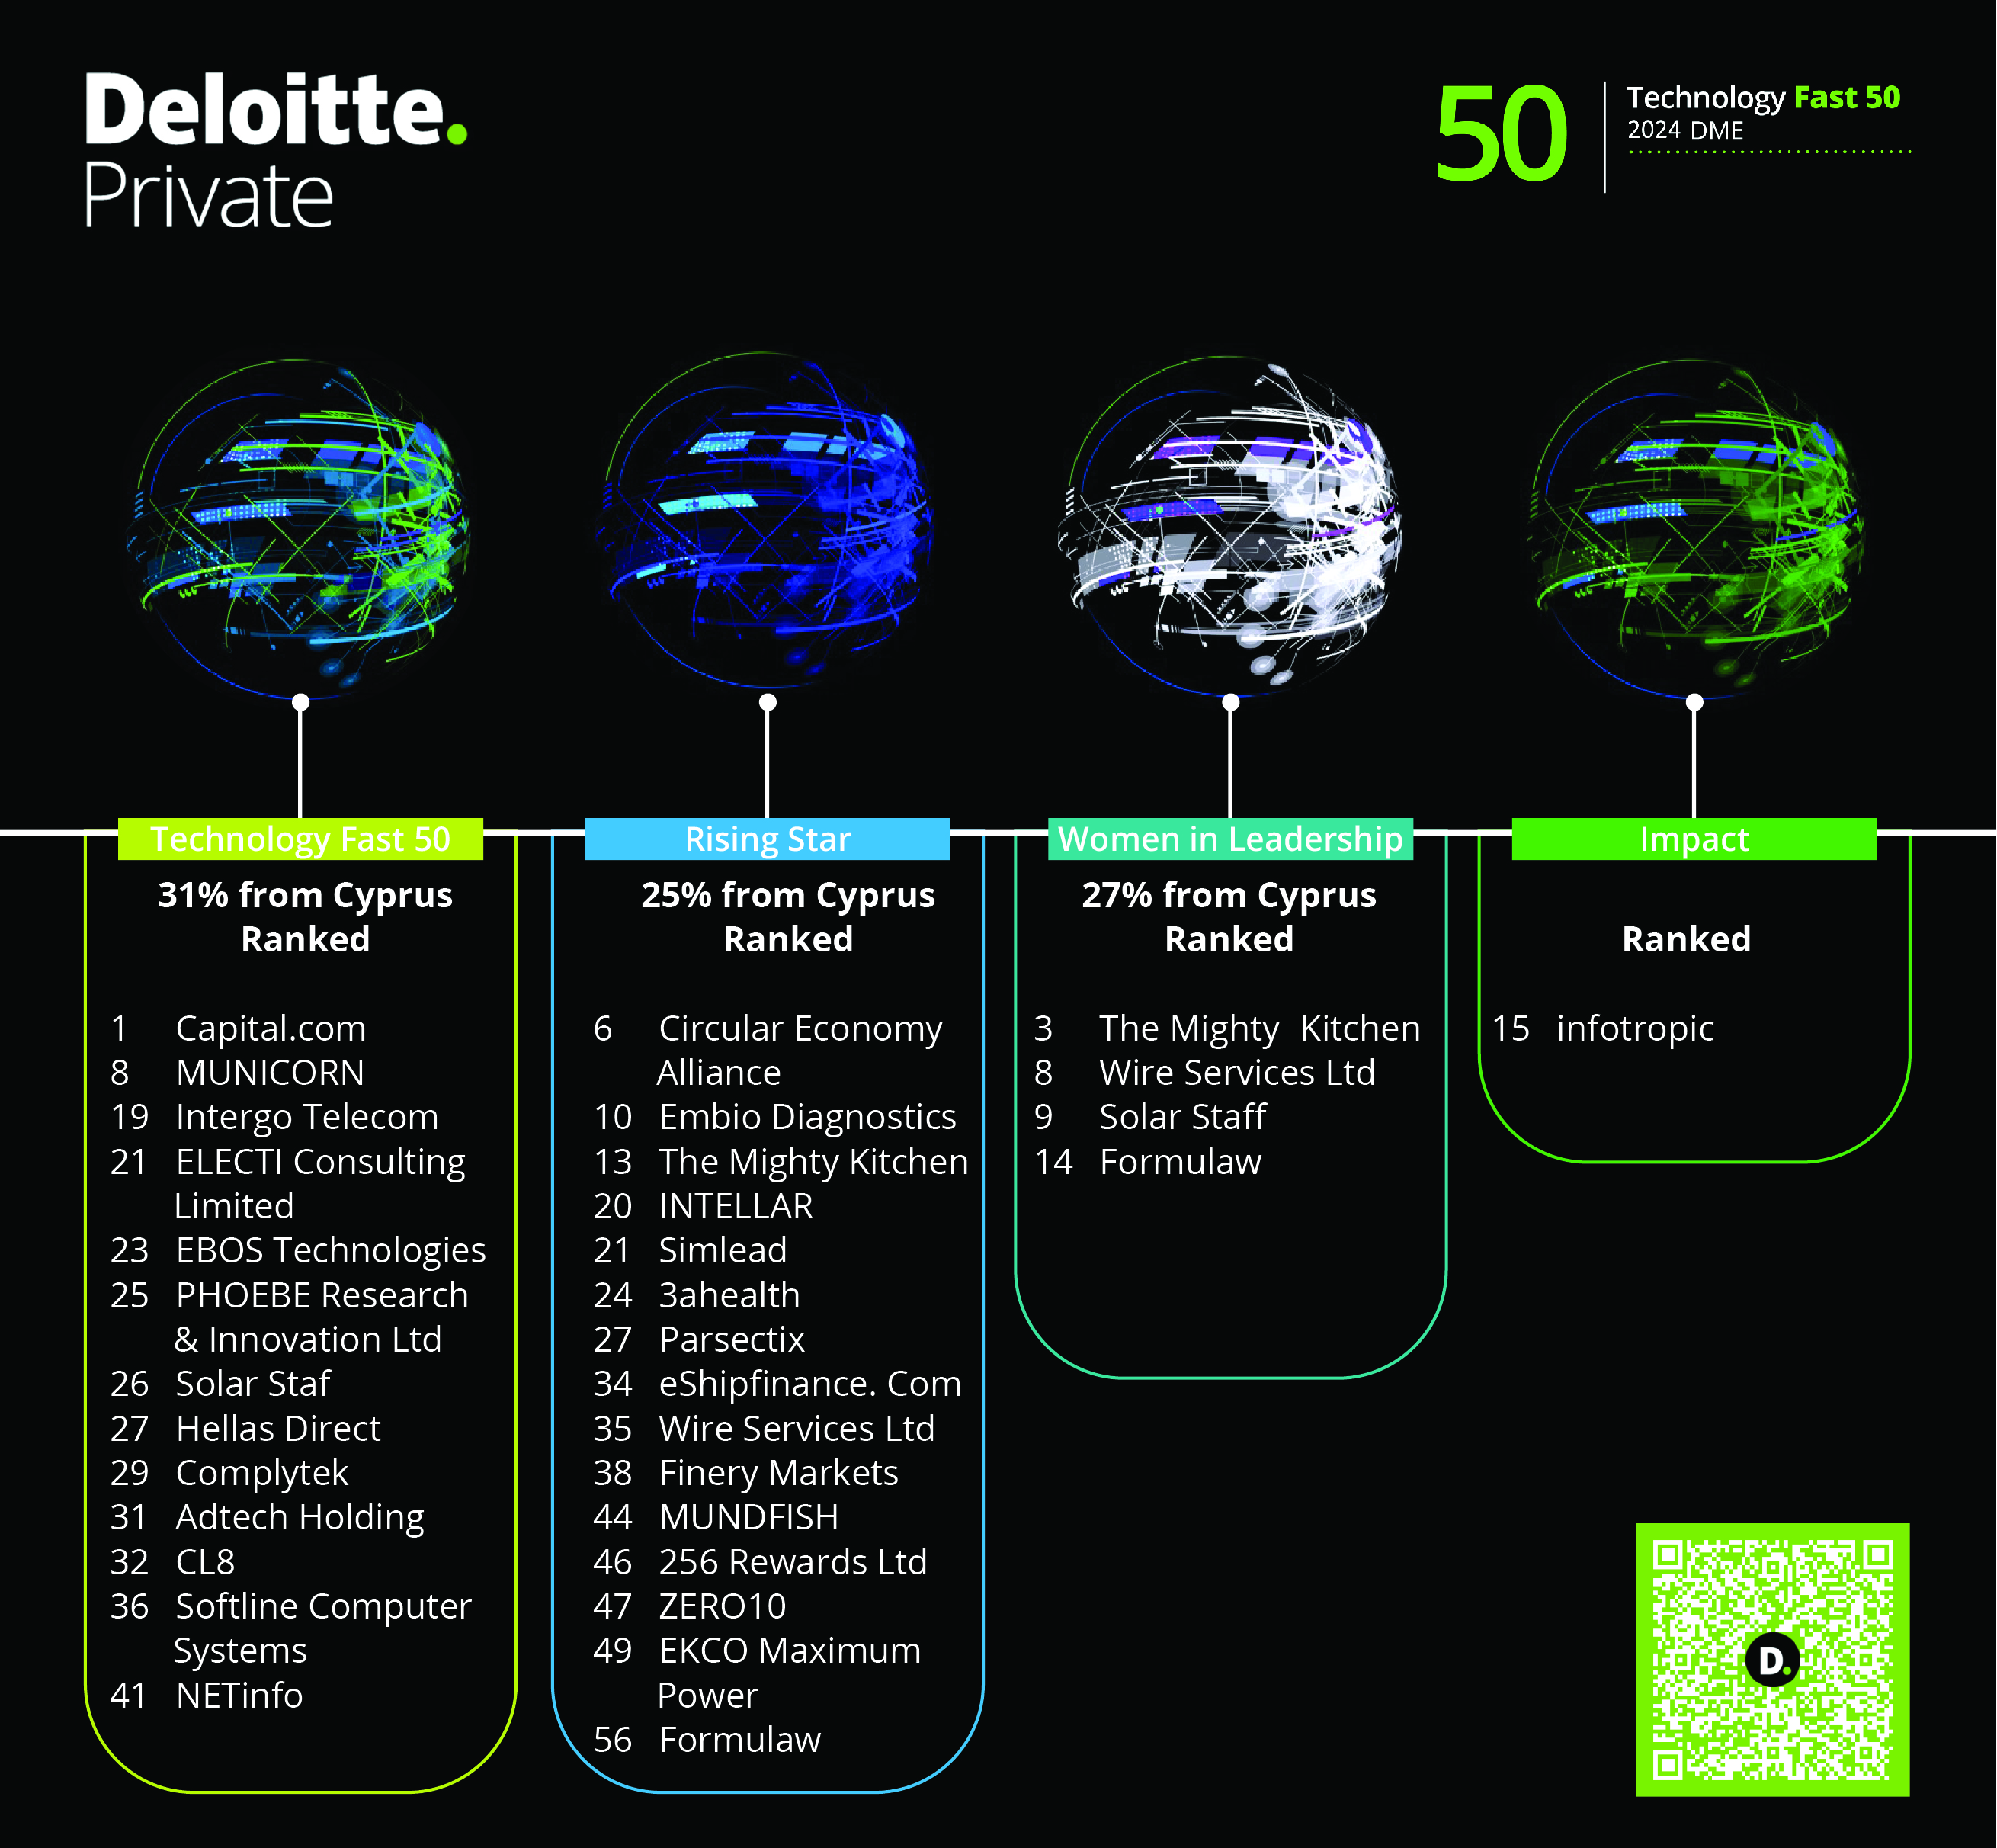 image Cyprus firm tops Deloitte technology Fast 50 rankings